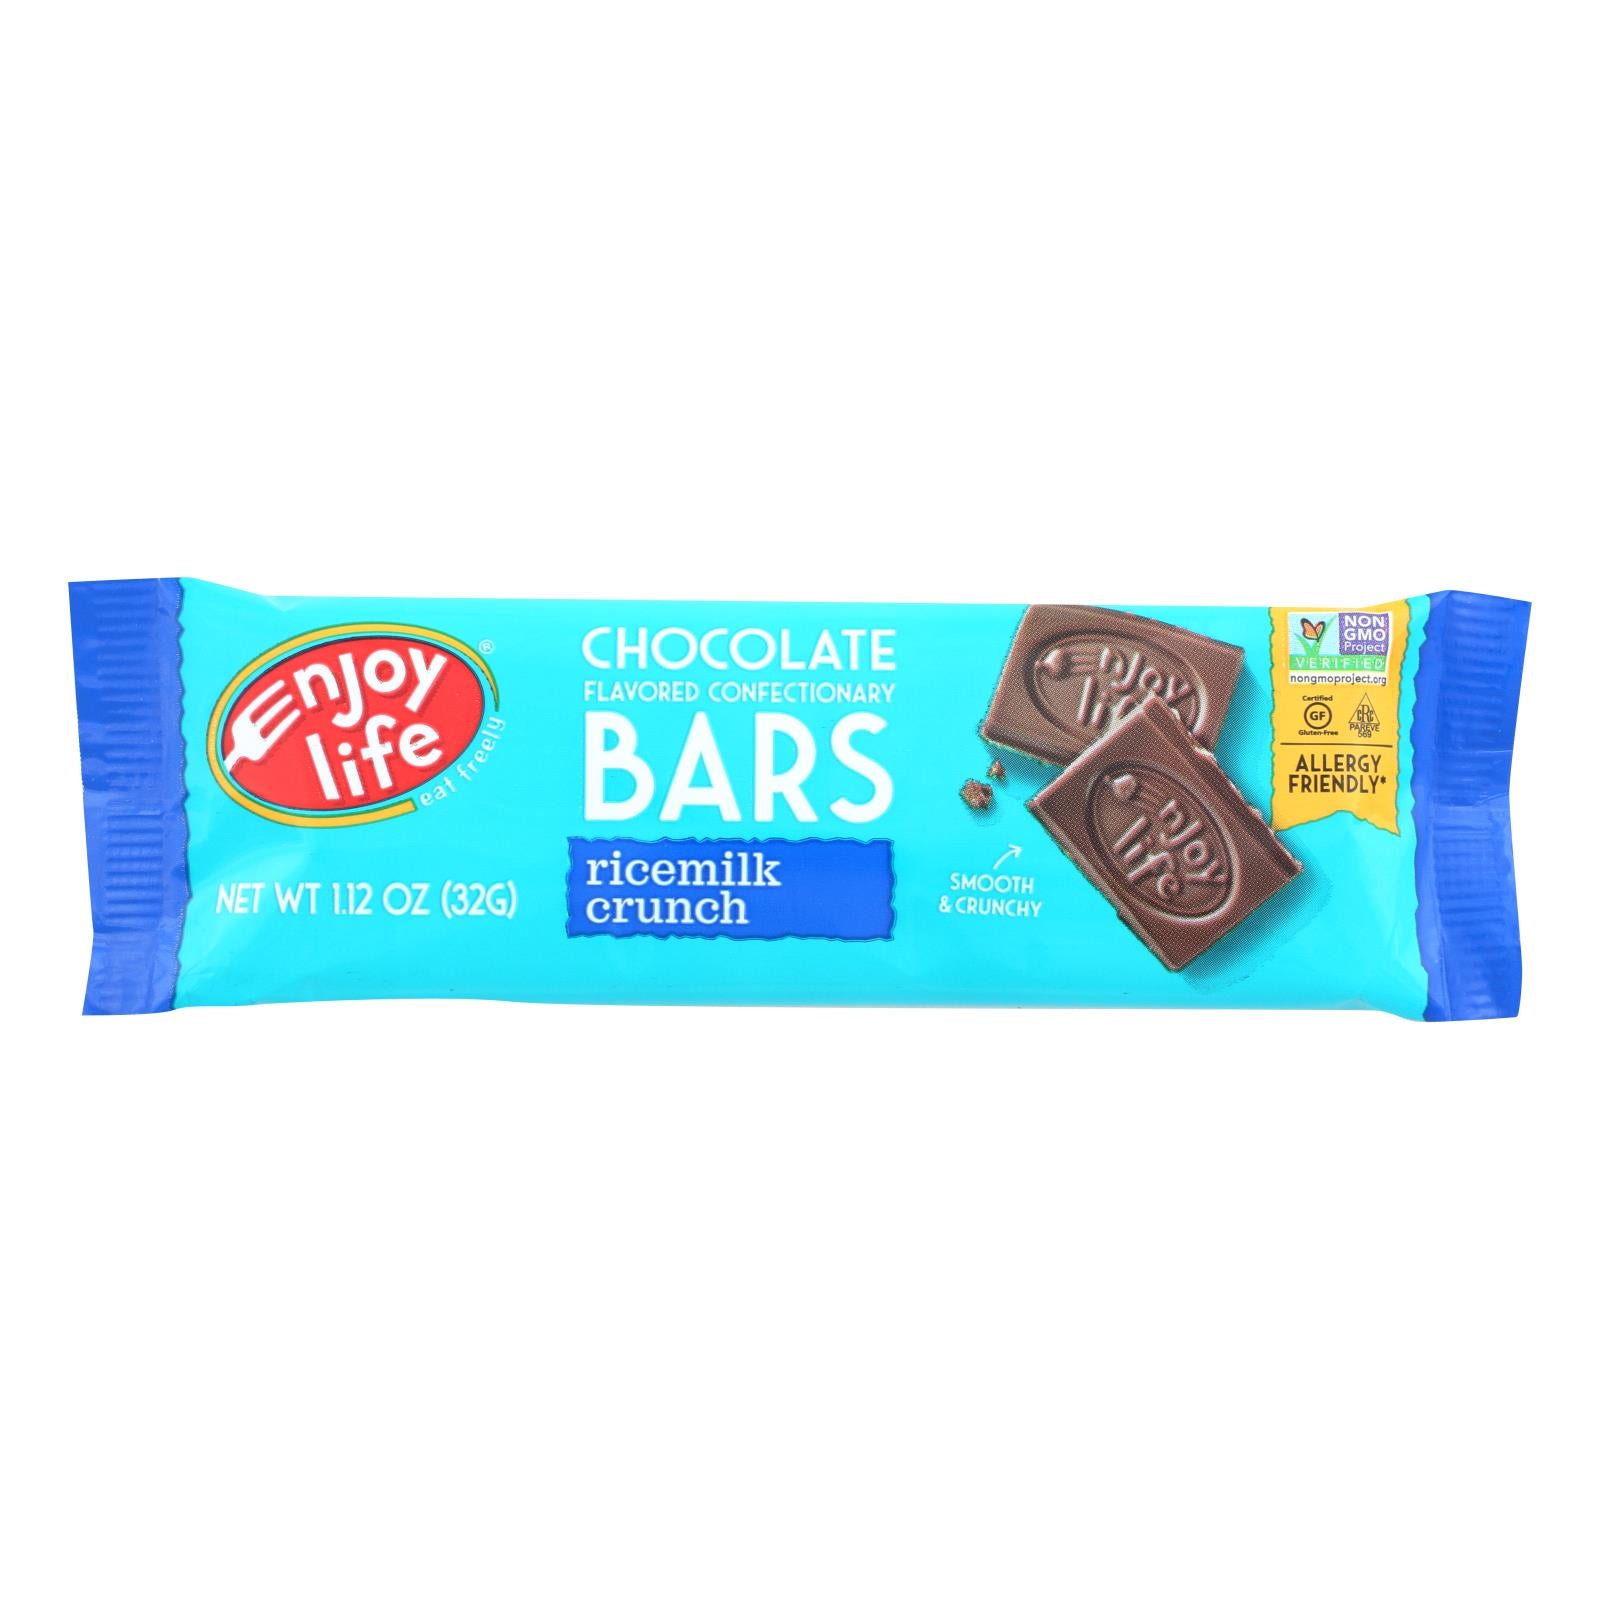 Enjoy Life - Chocolate Bar - Boom Choco Boom - Ricemilk Crunch - Dairy Free - 1.12 oz - Case of 24